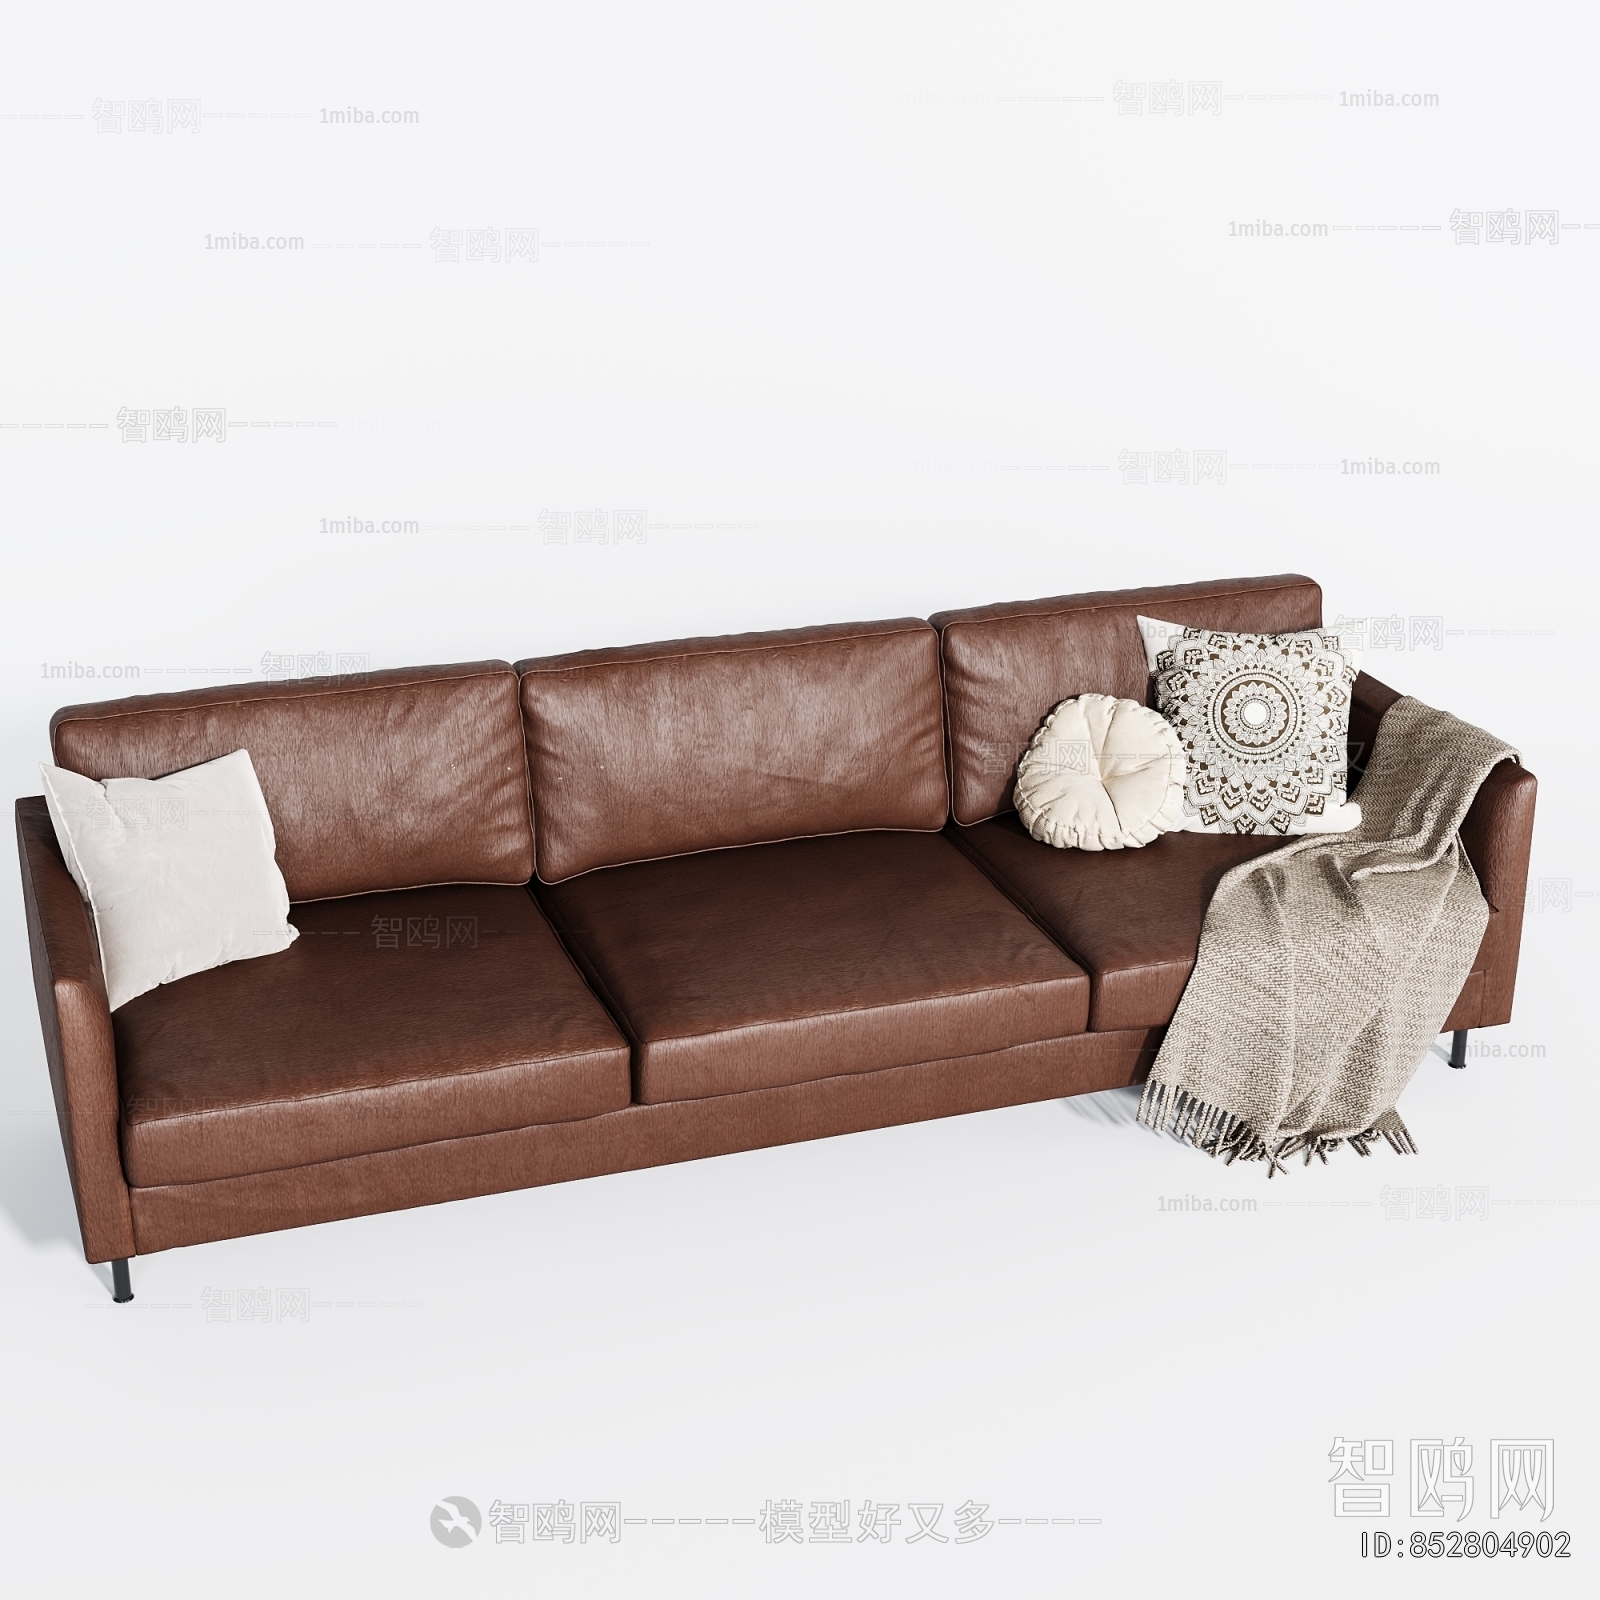 Retro Style Three-seat Sofa